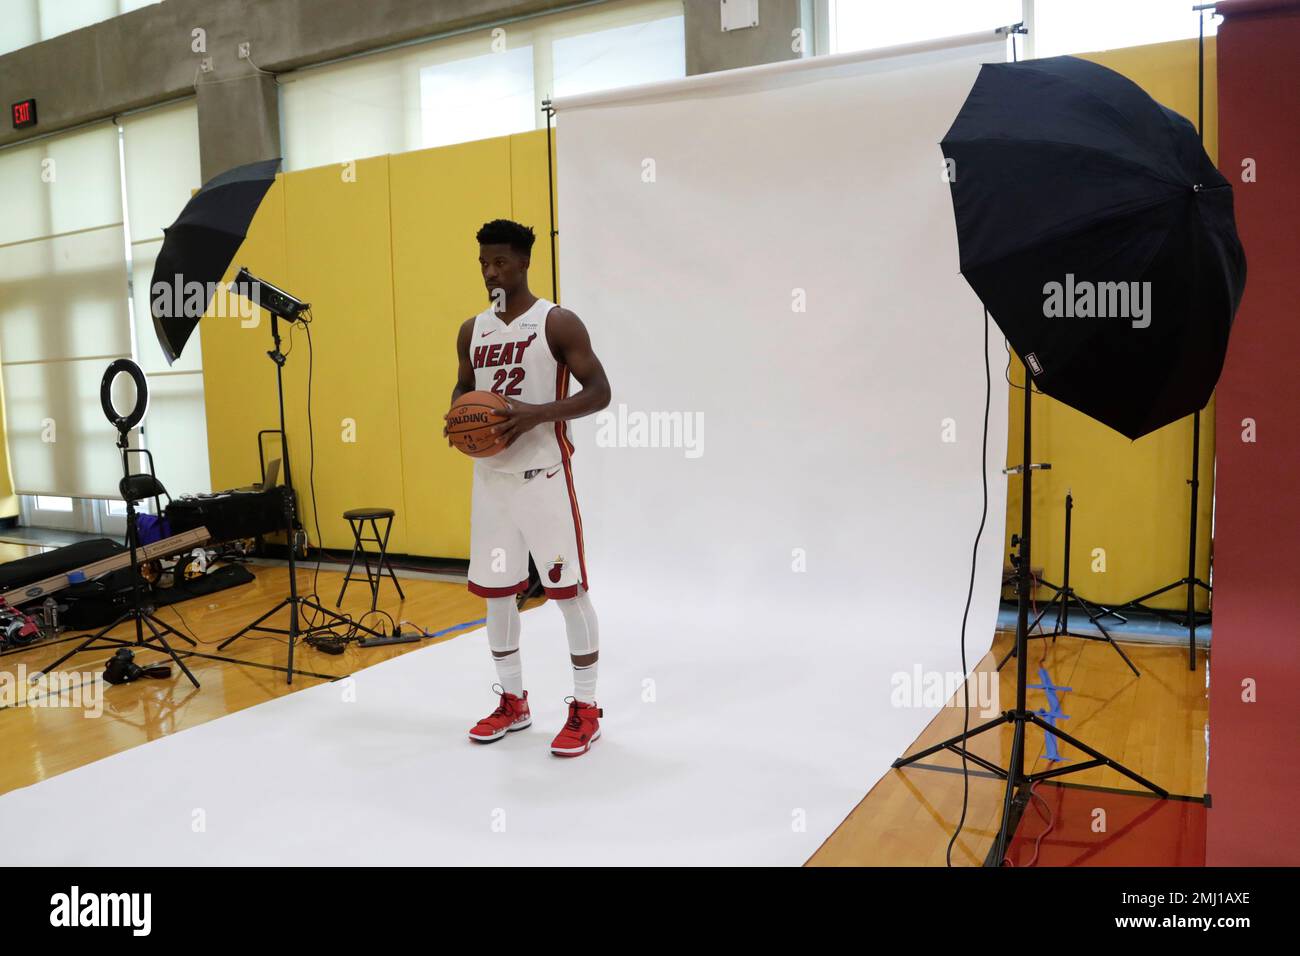 NBA - 3 Jimmys walk into a Media Day photoshoot 📸 #JimmyButler  #HEATCulture, Jimmy Butler Miami Heat